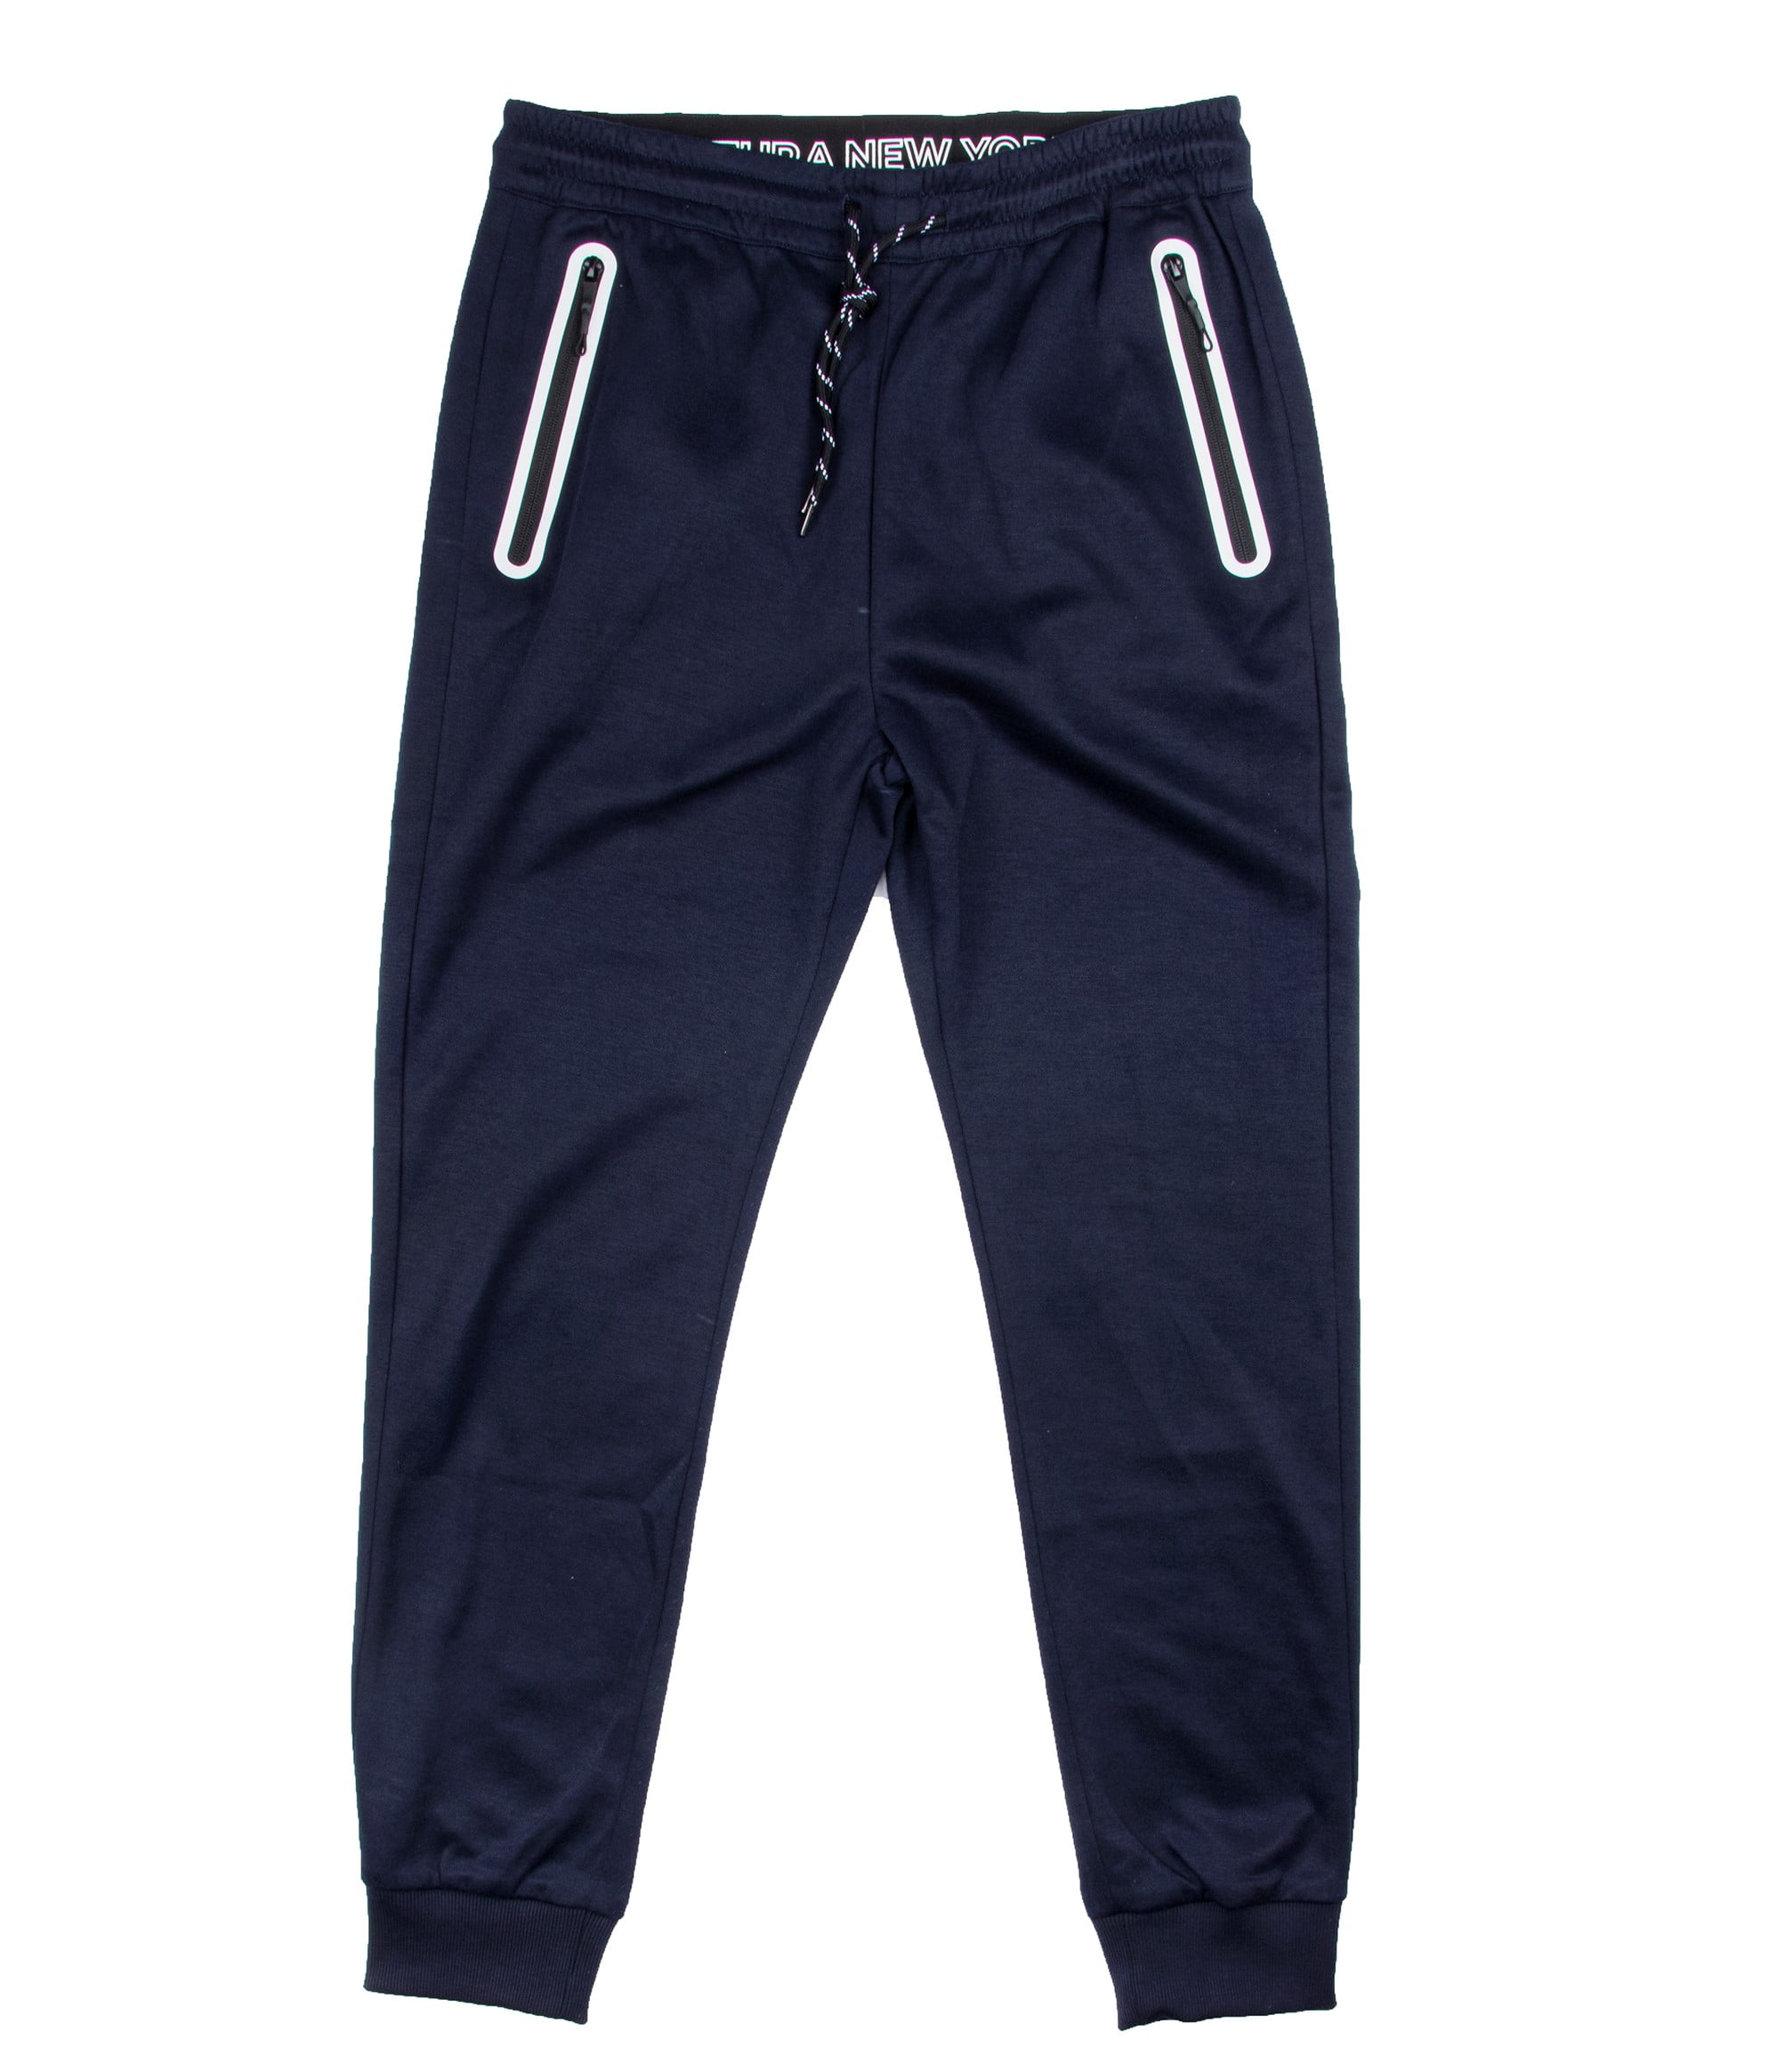 CULTURA Men's Active Fashion Jogger Sweatpants W/ Pockets & Elastic Bottom,  Athletic Pants for Gym & Running,Navy, Medium